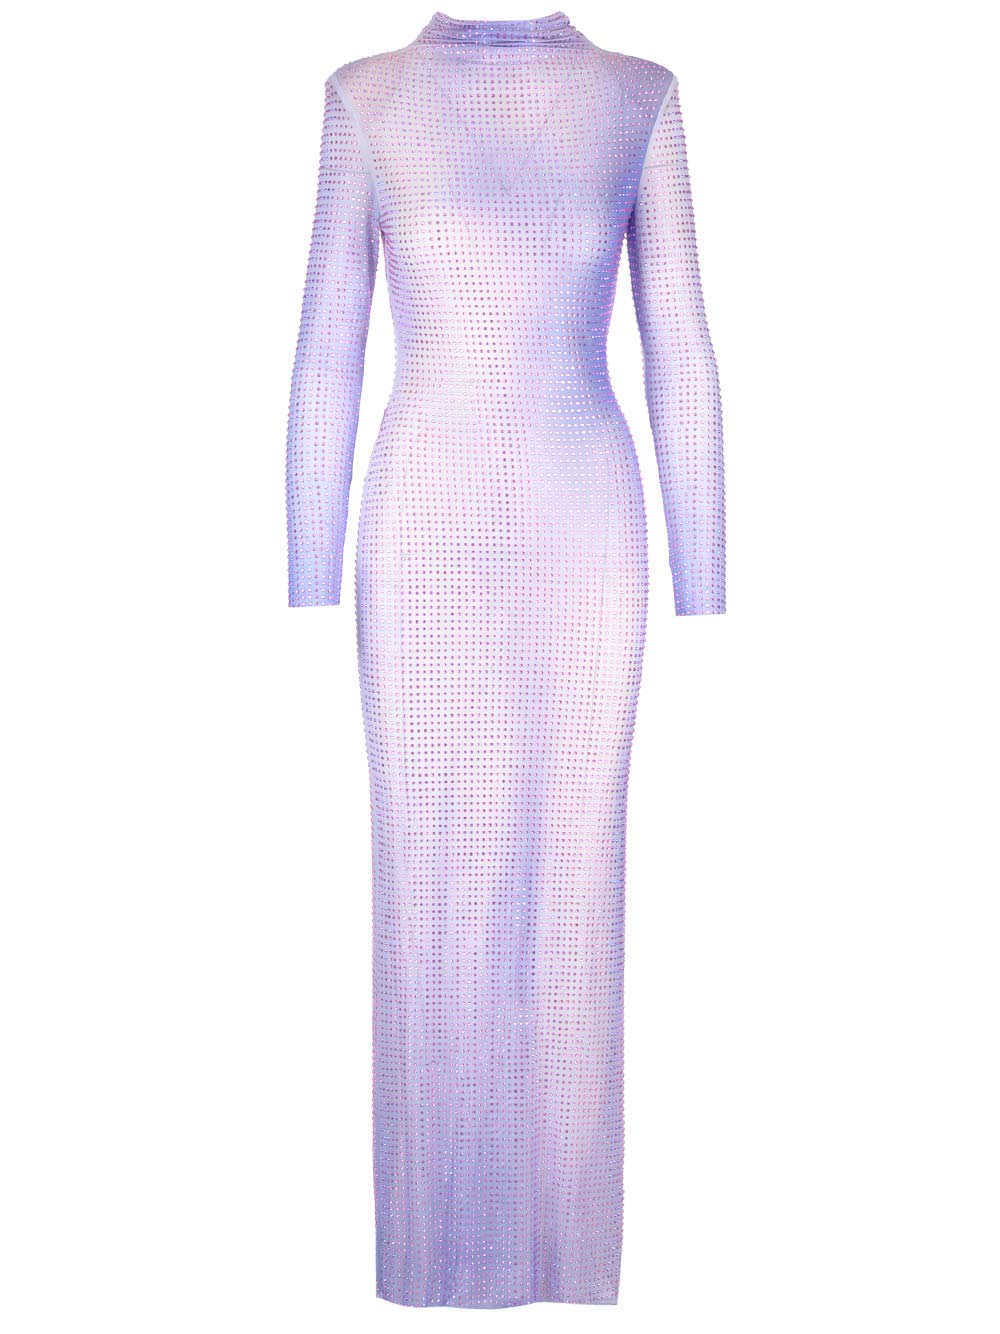 self-portrait Lilac Jersey Dress